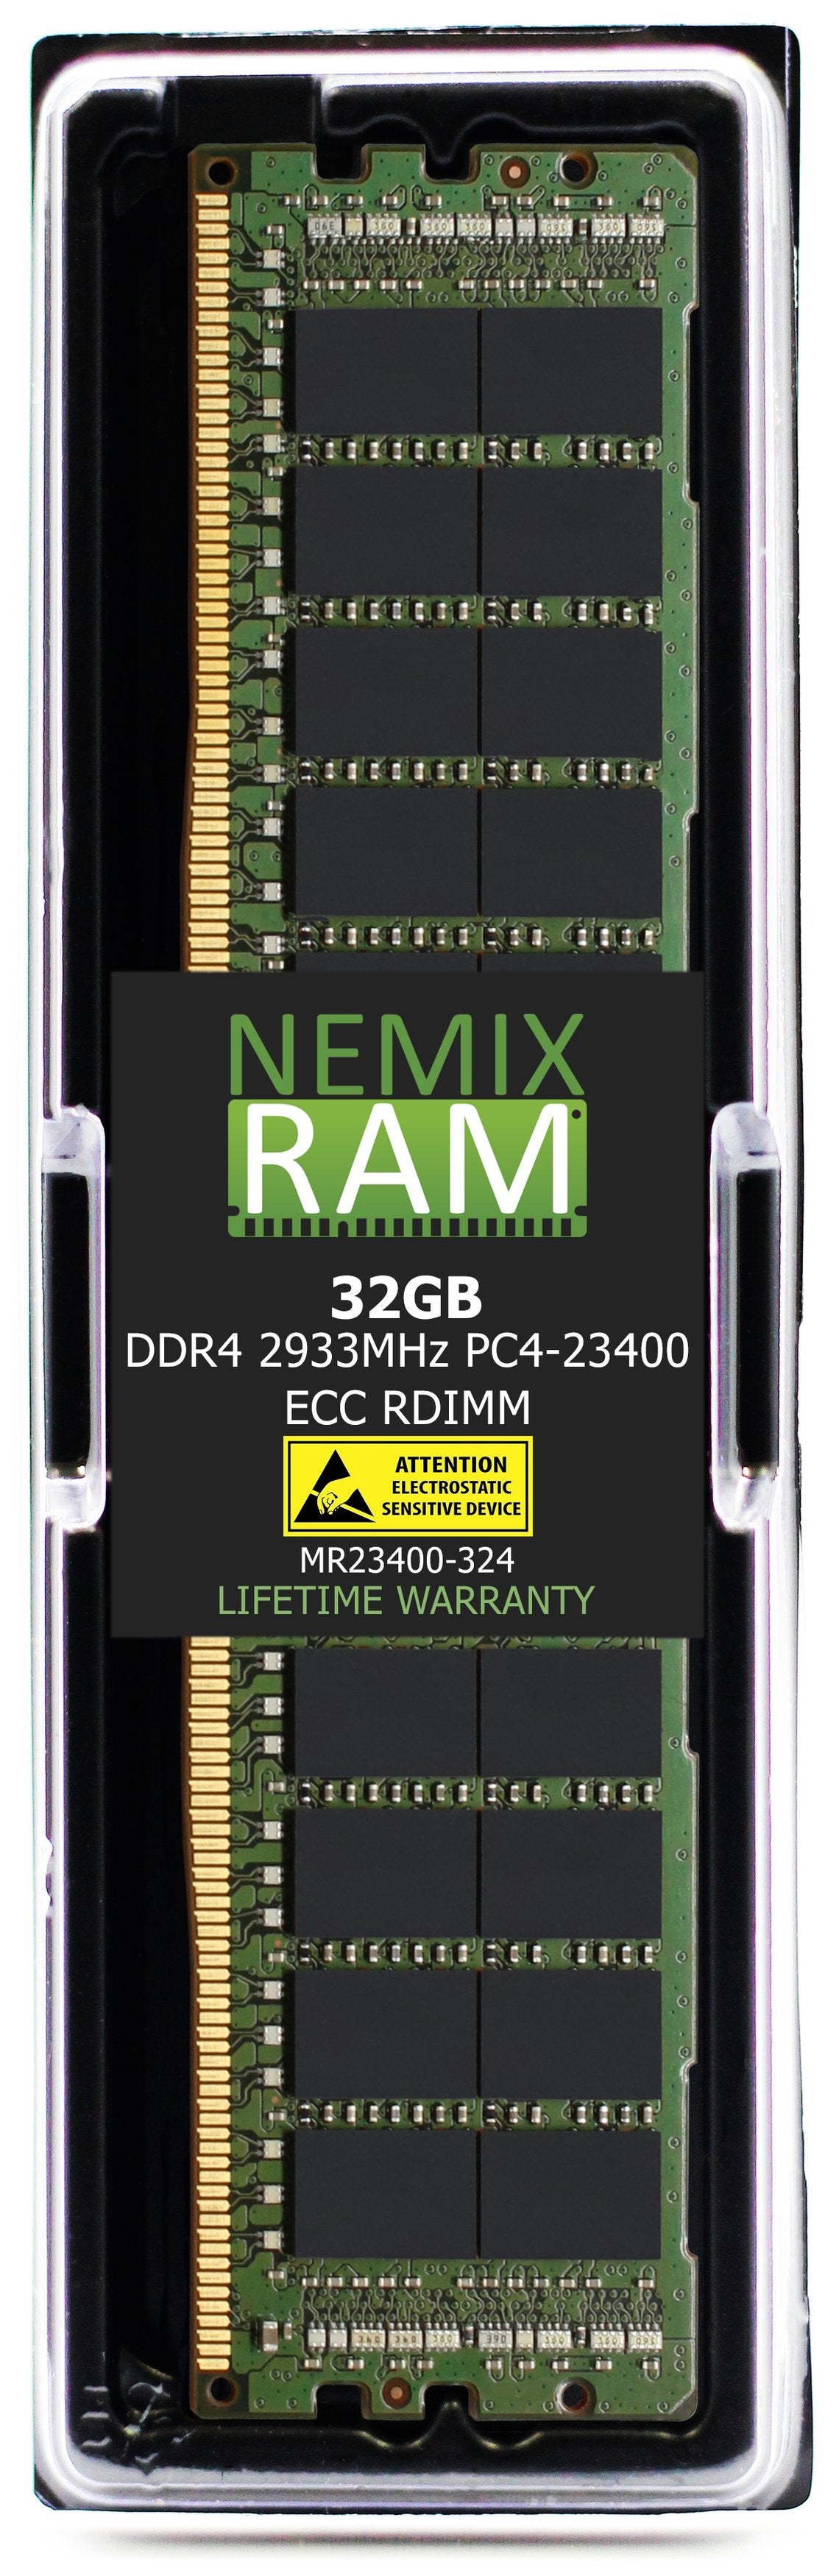 32GB DDR4 2933MHZ PC4-23400 RDIMM Compatible with Supermicro MEM-DR432L-HL01-ER29